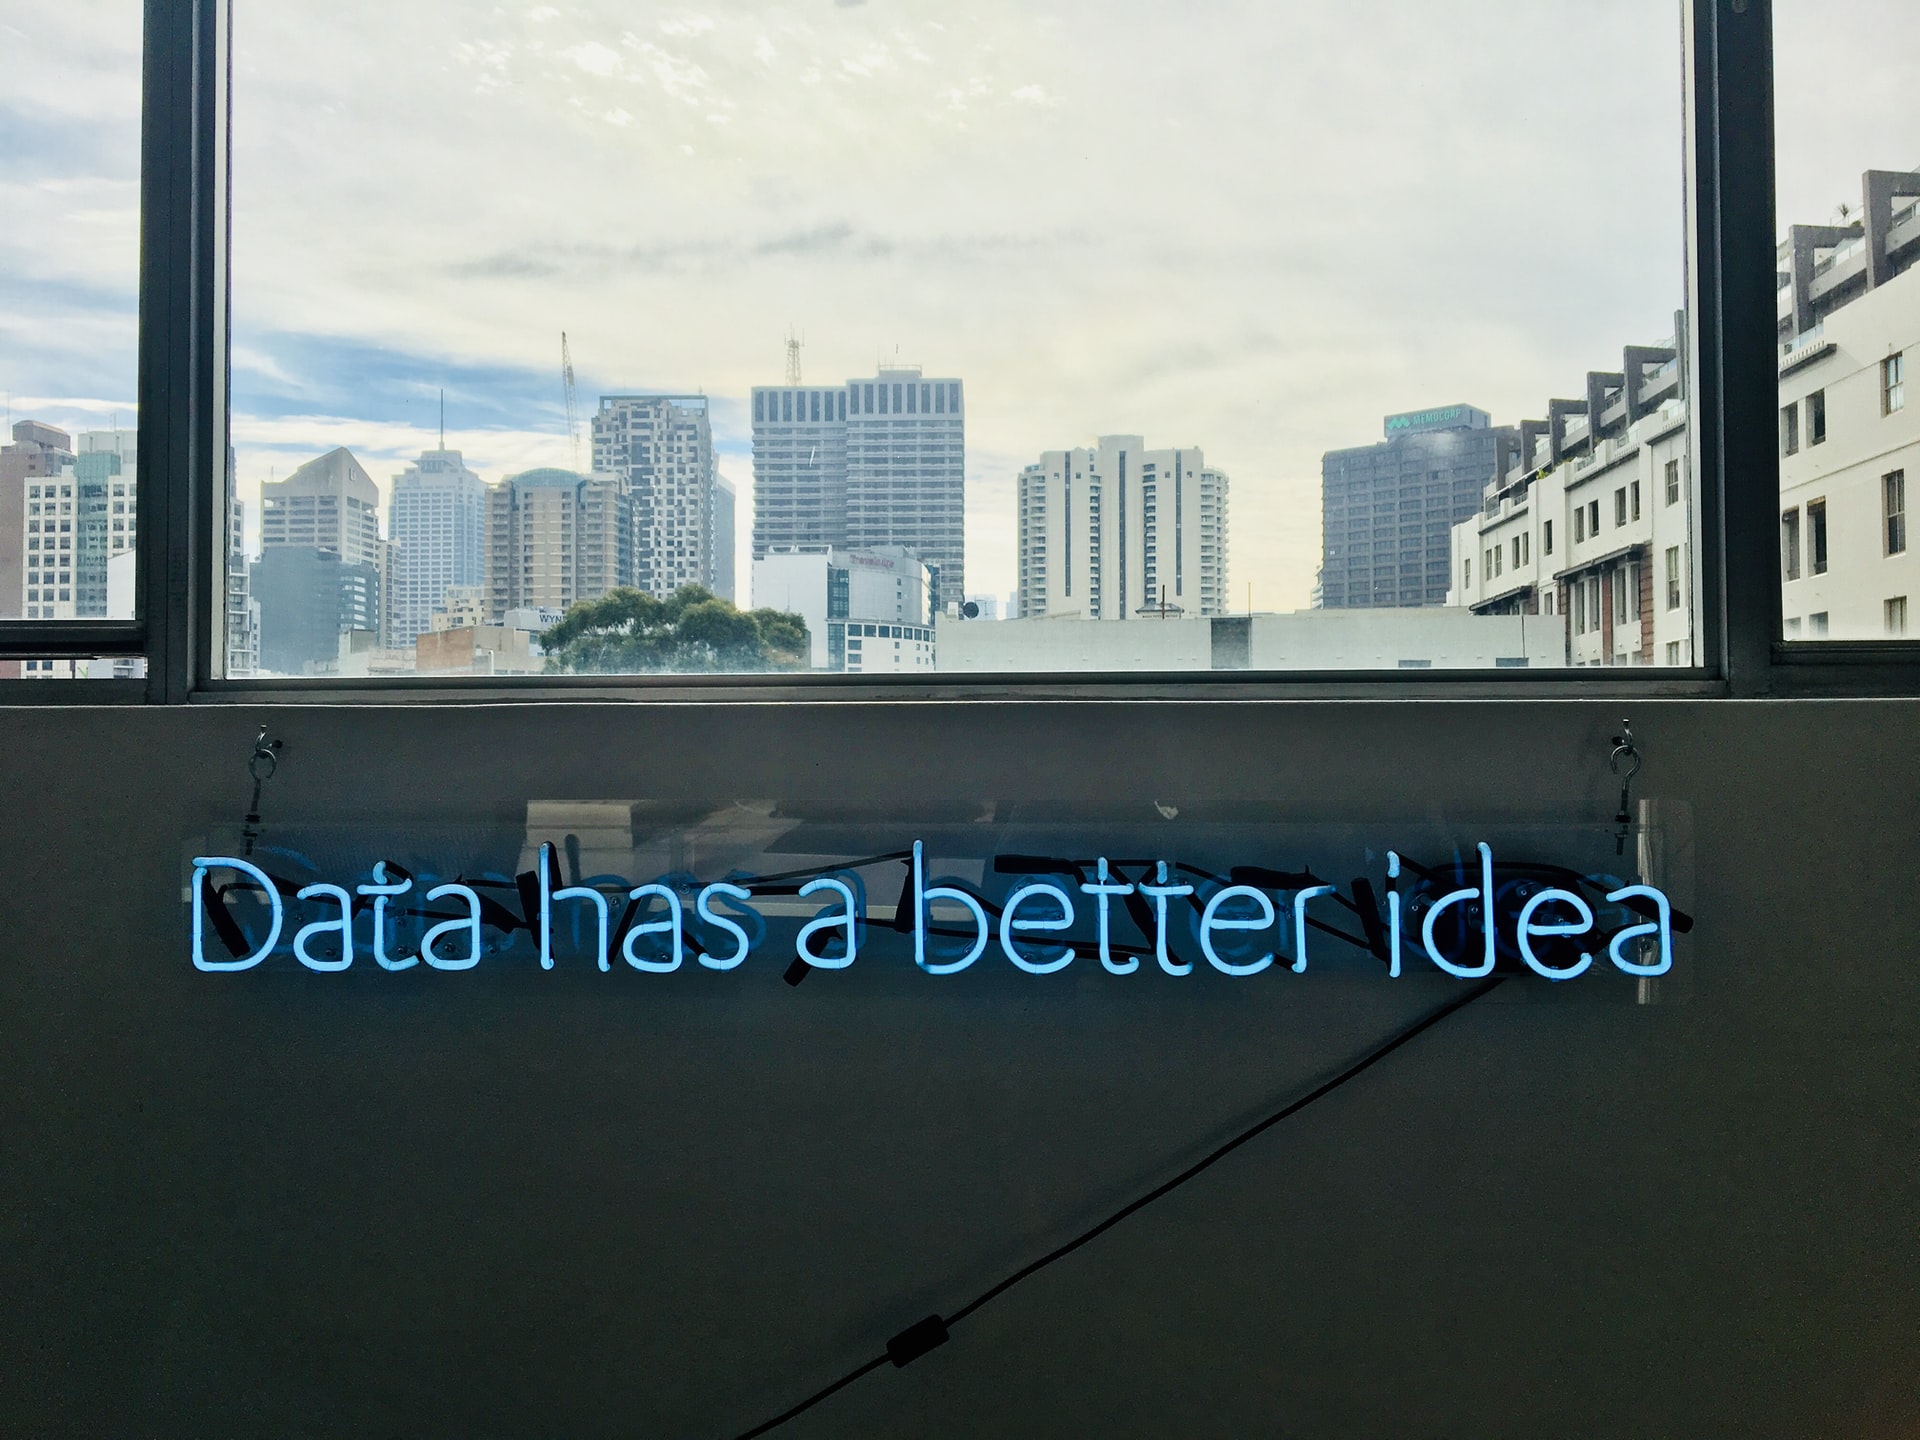 Data has a better idea by Franki Chamaki